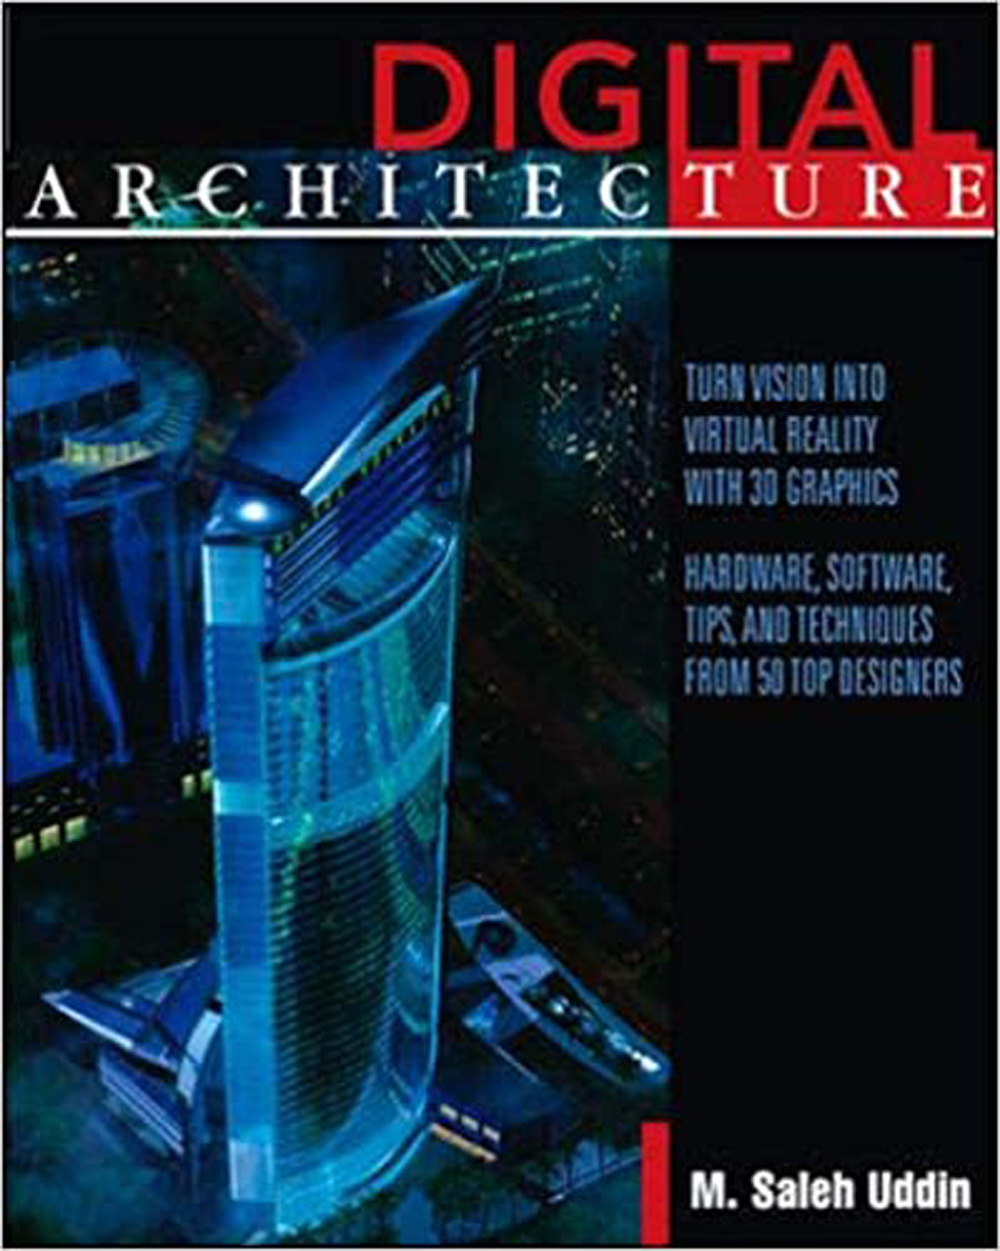 Digital Architecture, April 1999, Asia Society